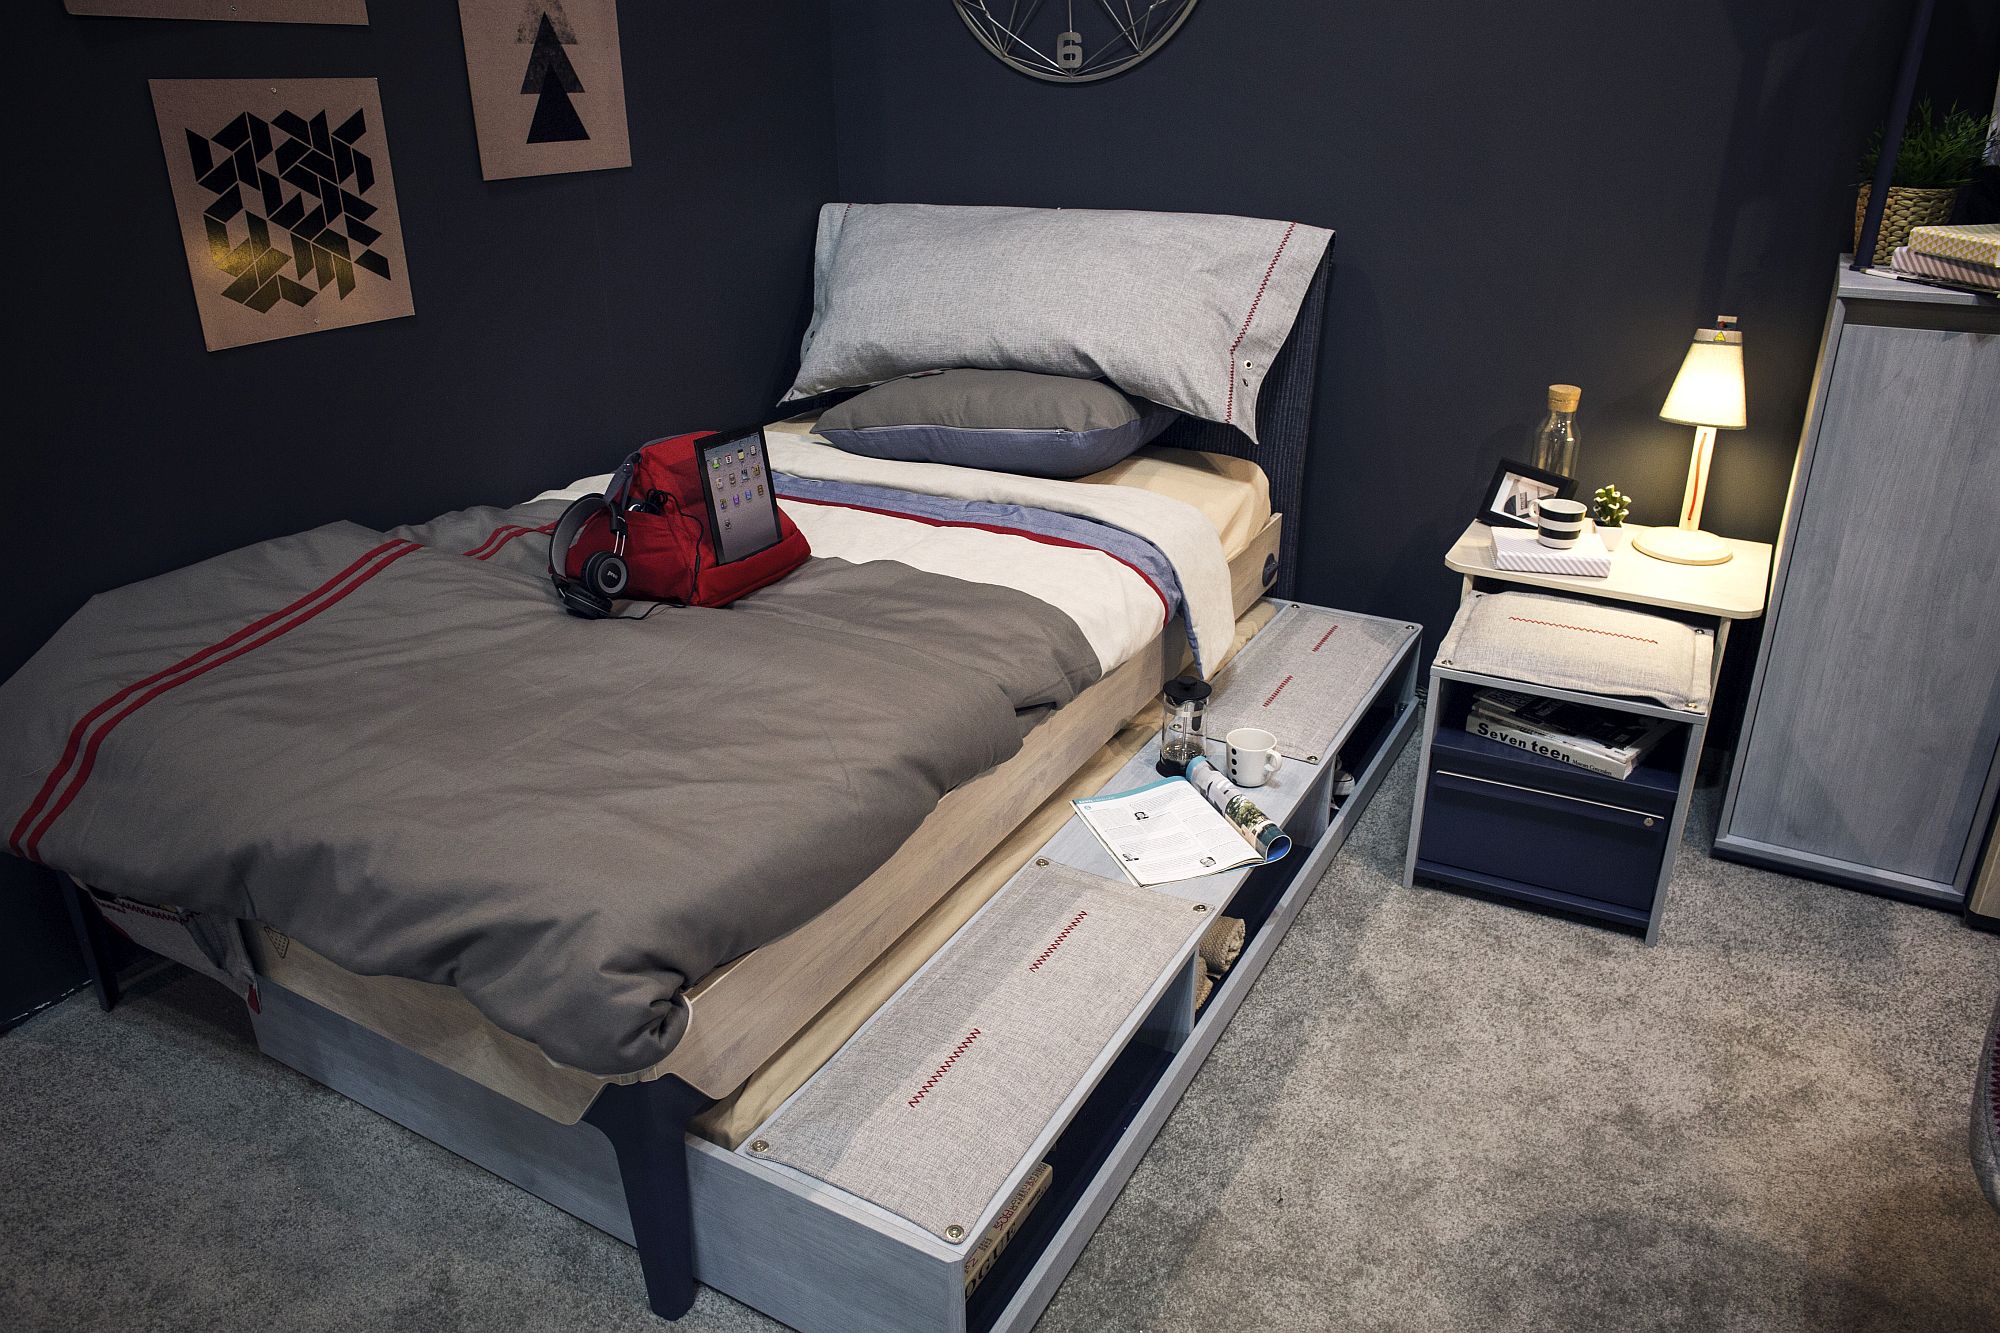 Trundle-bed-in-the-corner-combines-storage-space-with-smart-arrangement